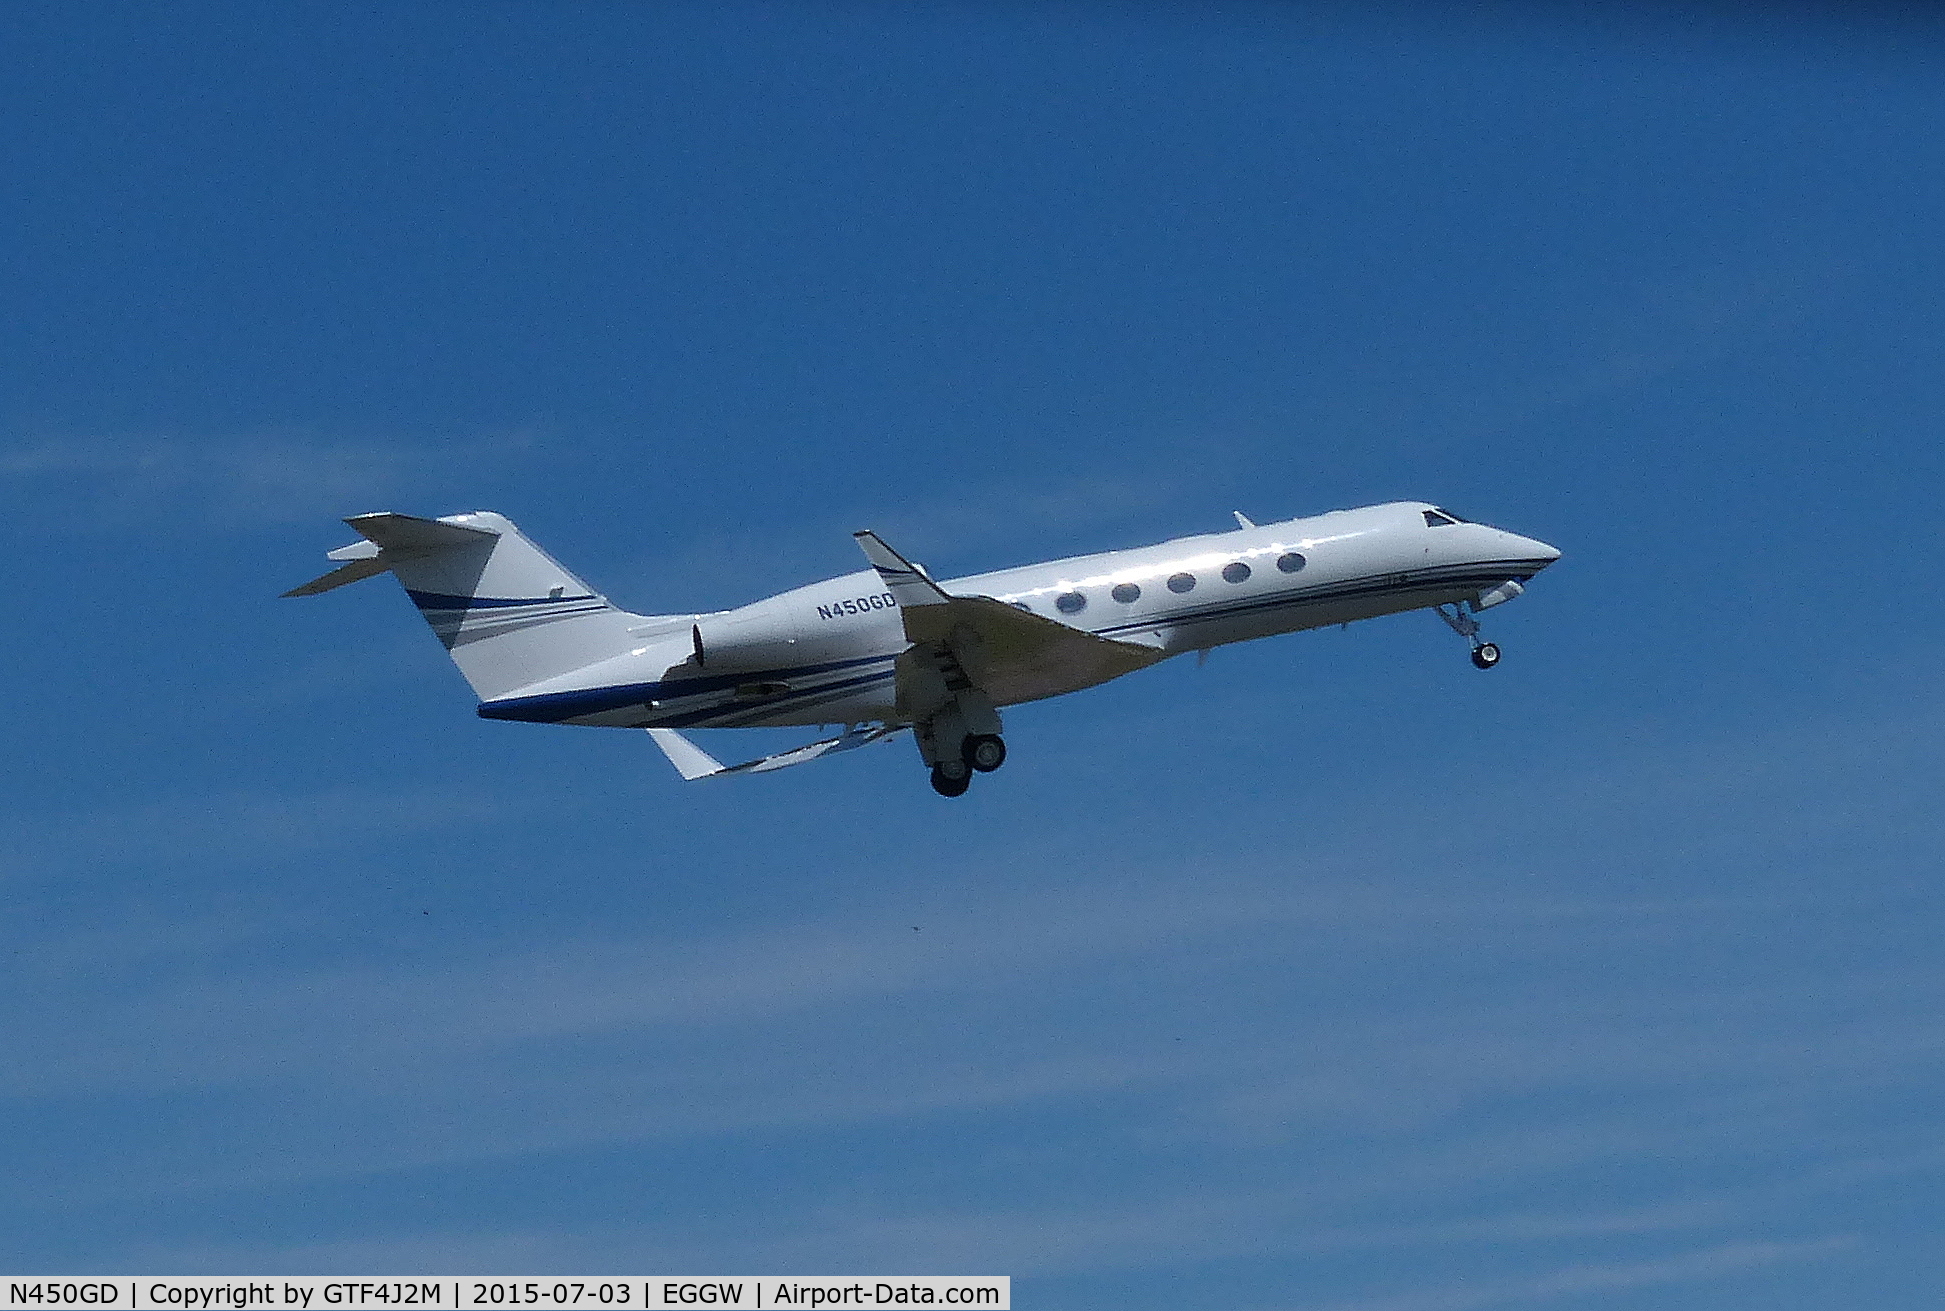 N450GD, 2014 Gulfstream Aerospace 450 C/N 4308, N450GD departing Luton 3.7.15